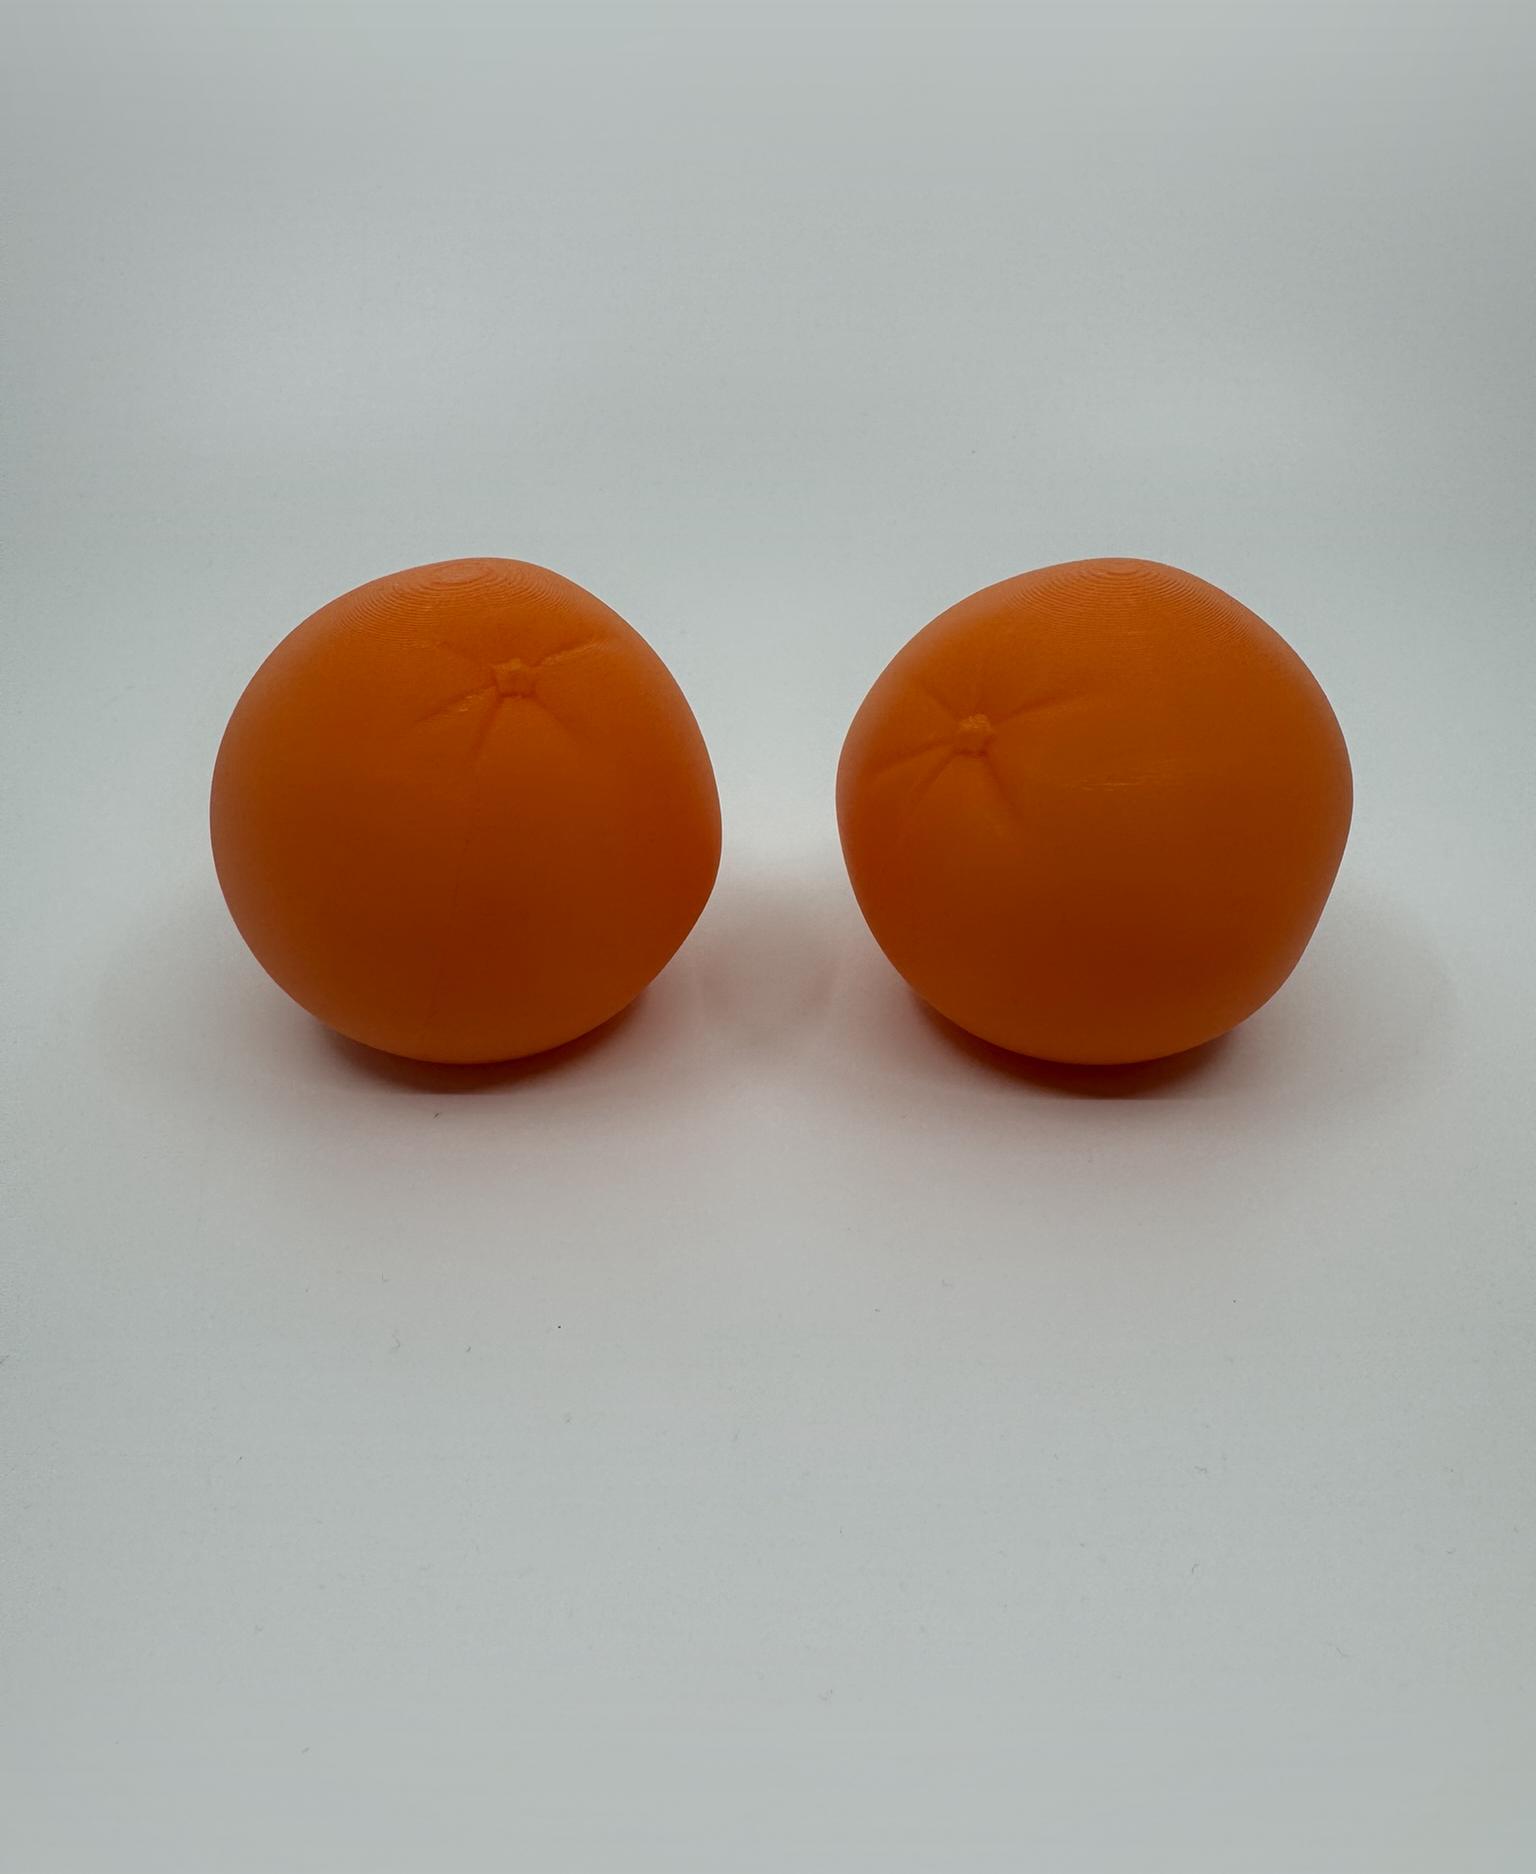 Orange 3d model